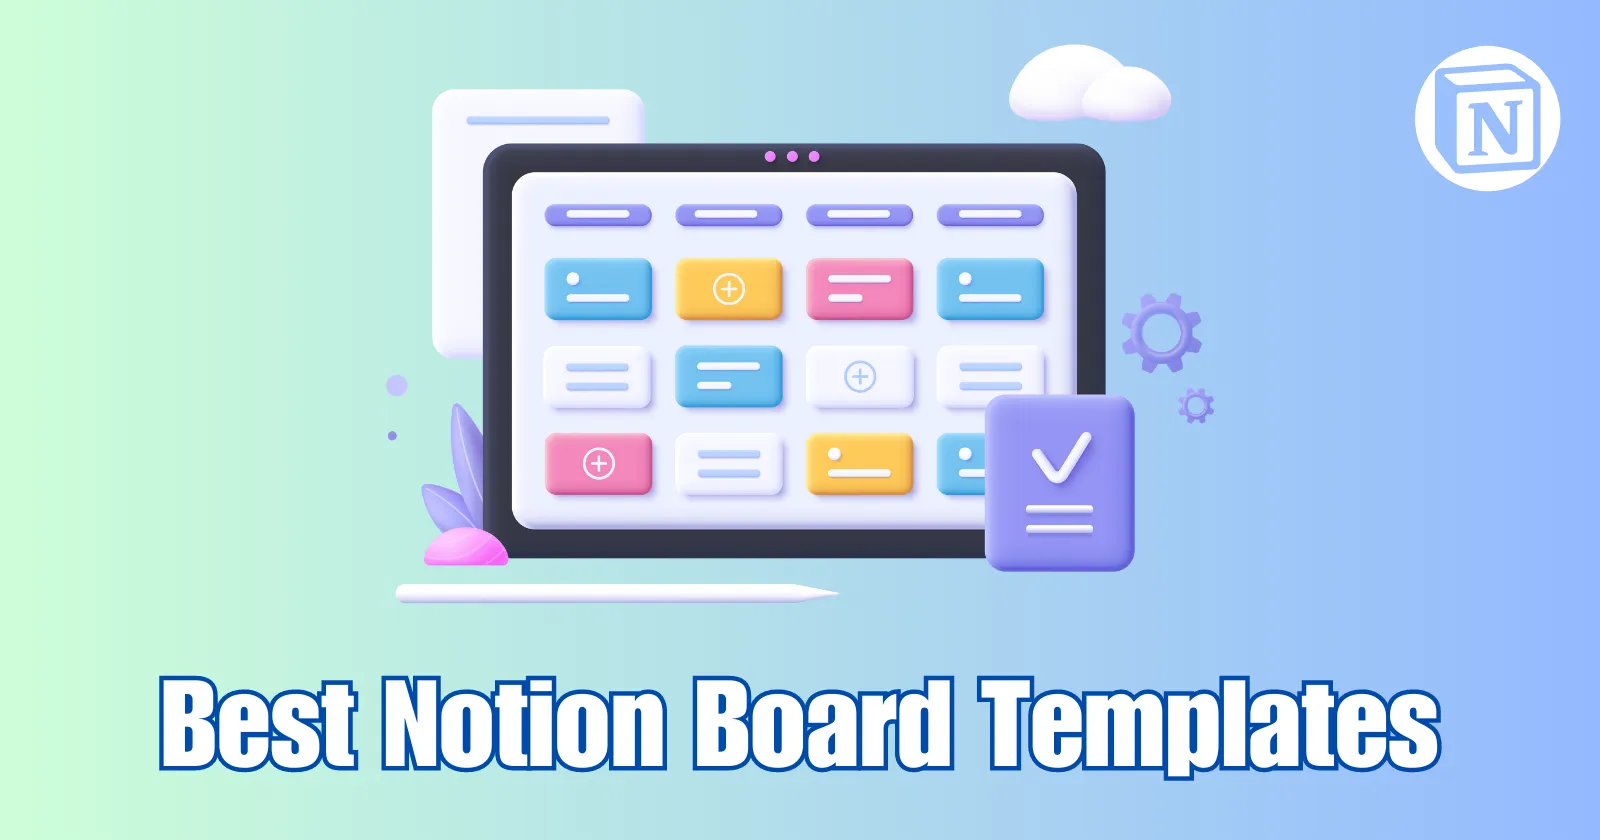 7 Free & Best Notion Board Templates